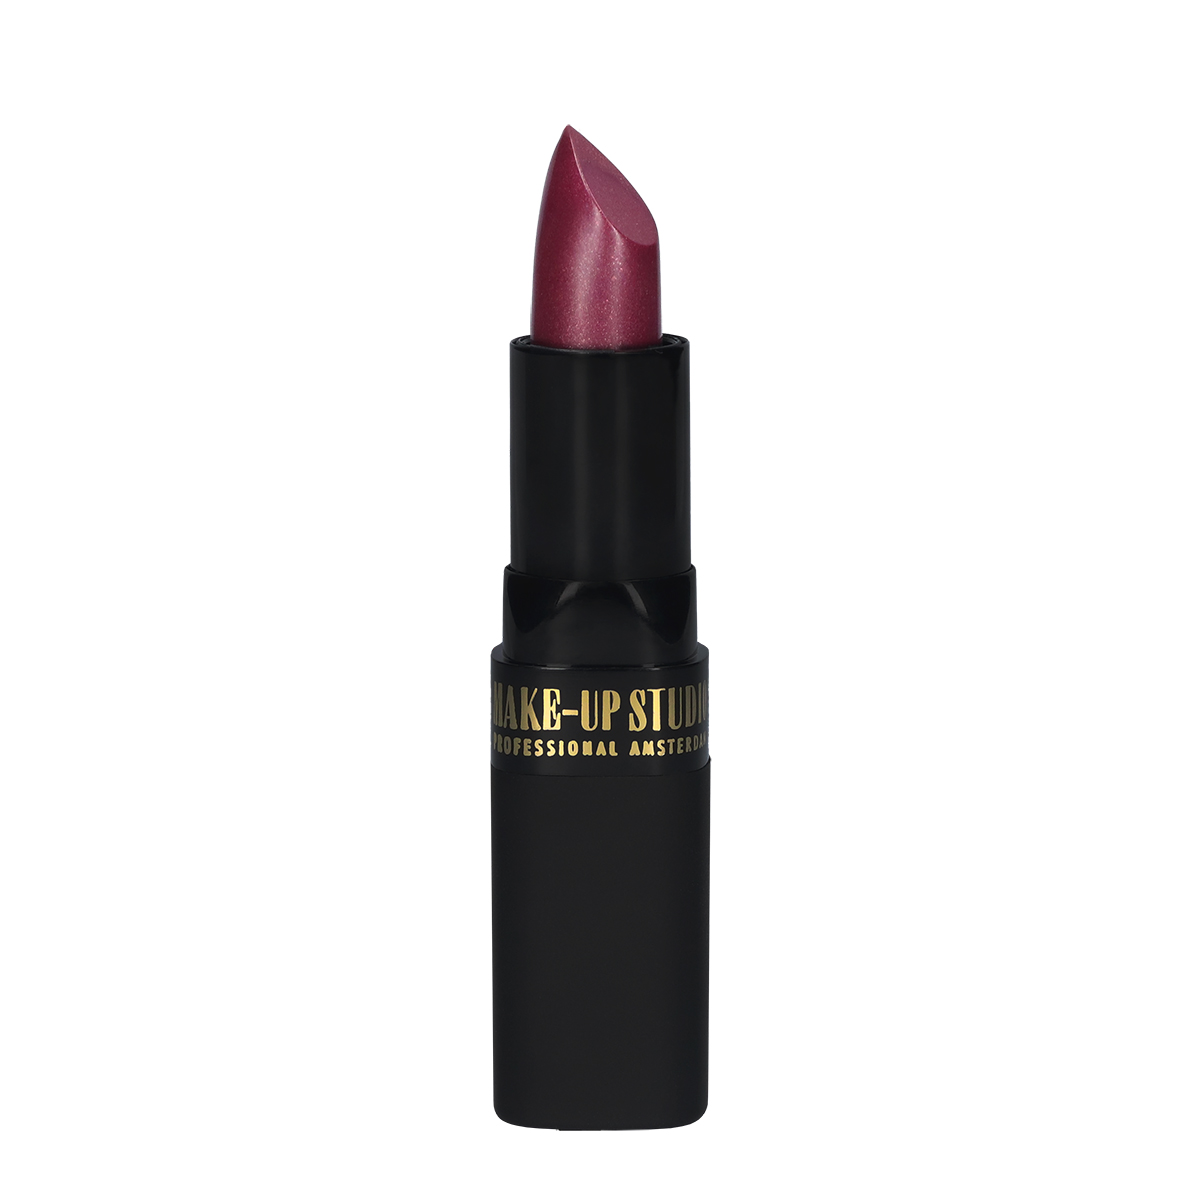 Make-up Studio Lipstick Lippenstift - 63 Purpe Glossy